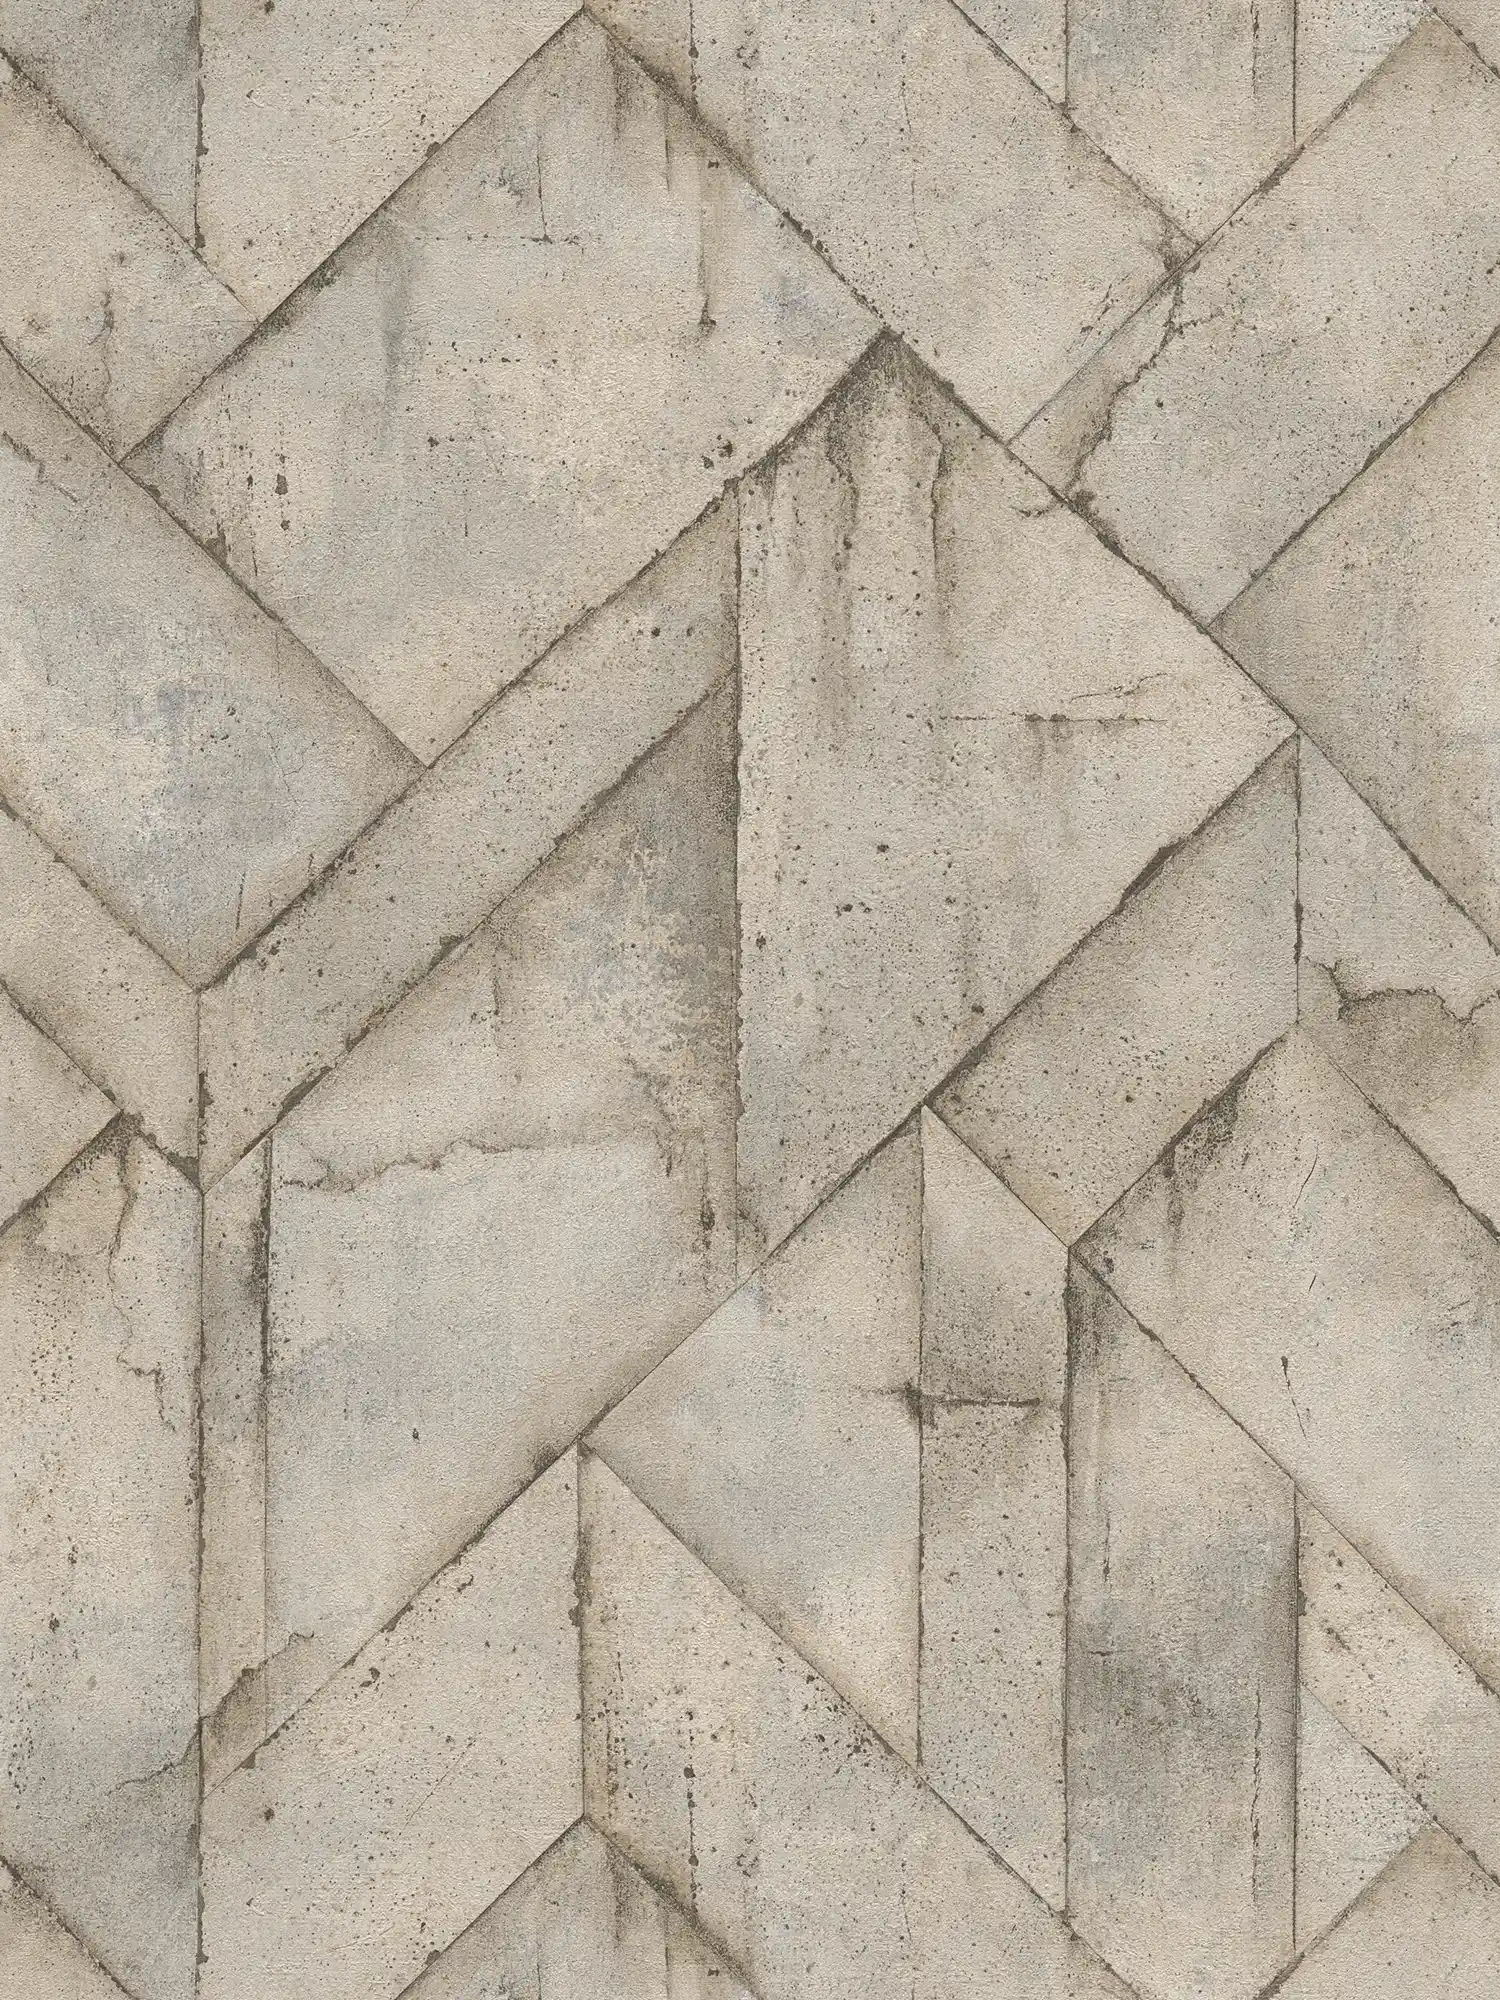         Betonoptik Tapete rustikal & geometrisches Design – Beige, Braun, Grau
    